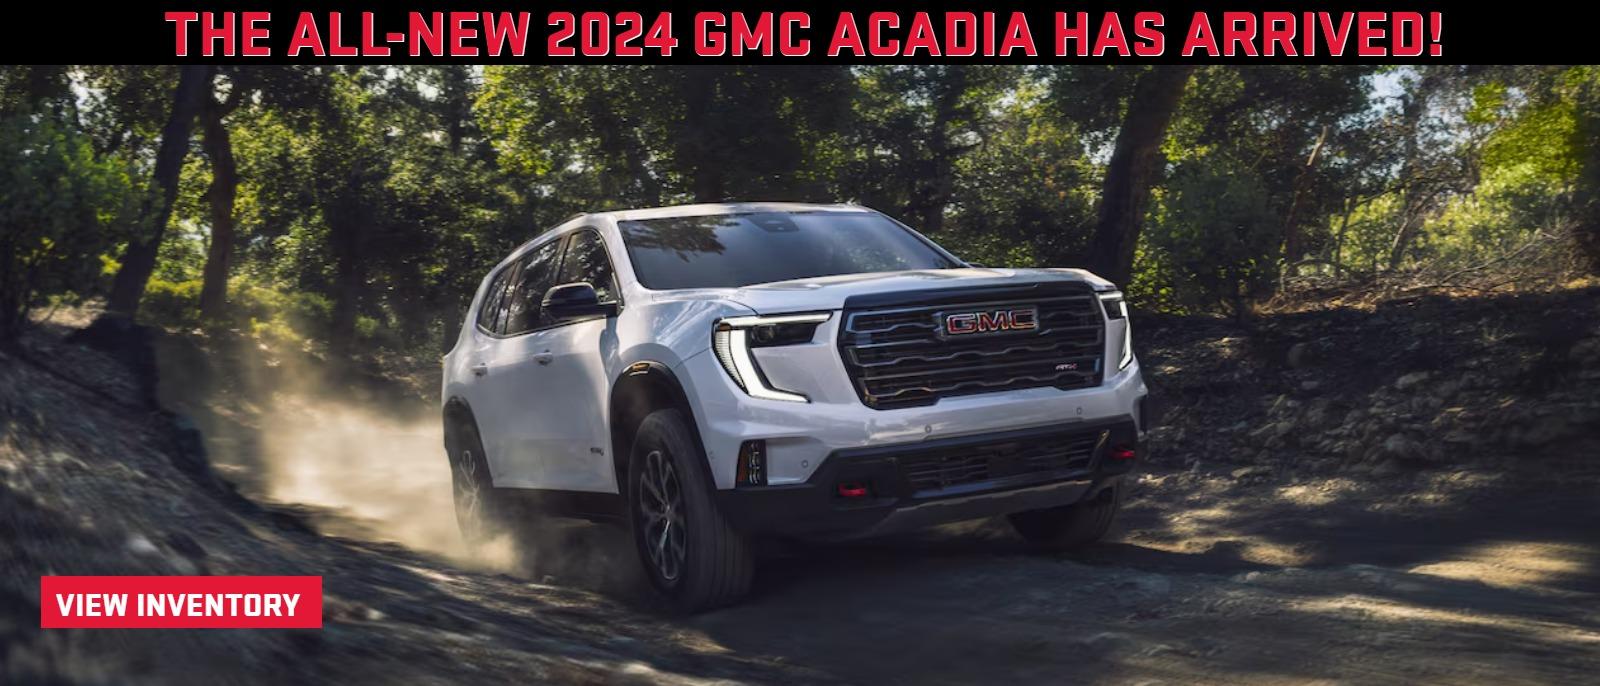 The All-New 2024 GMC Acadia